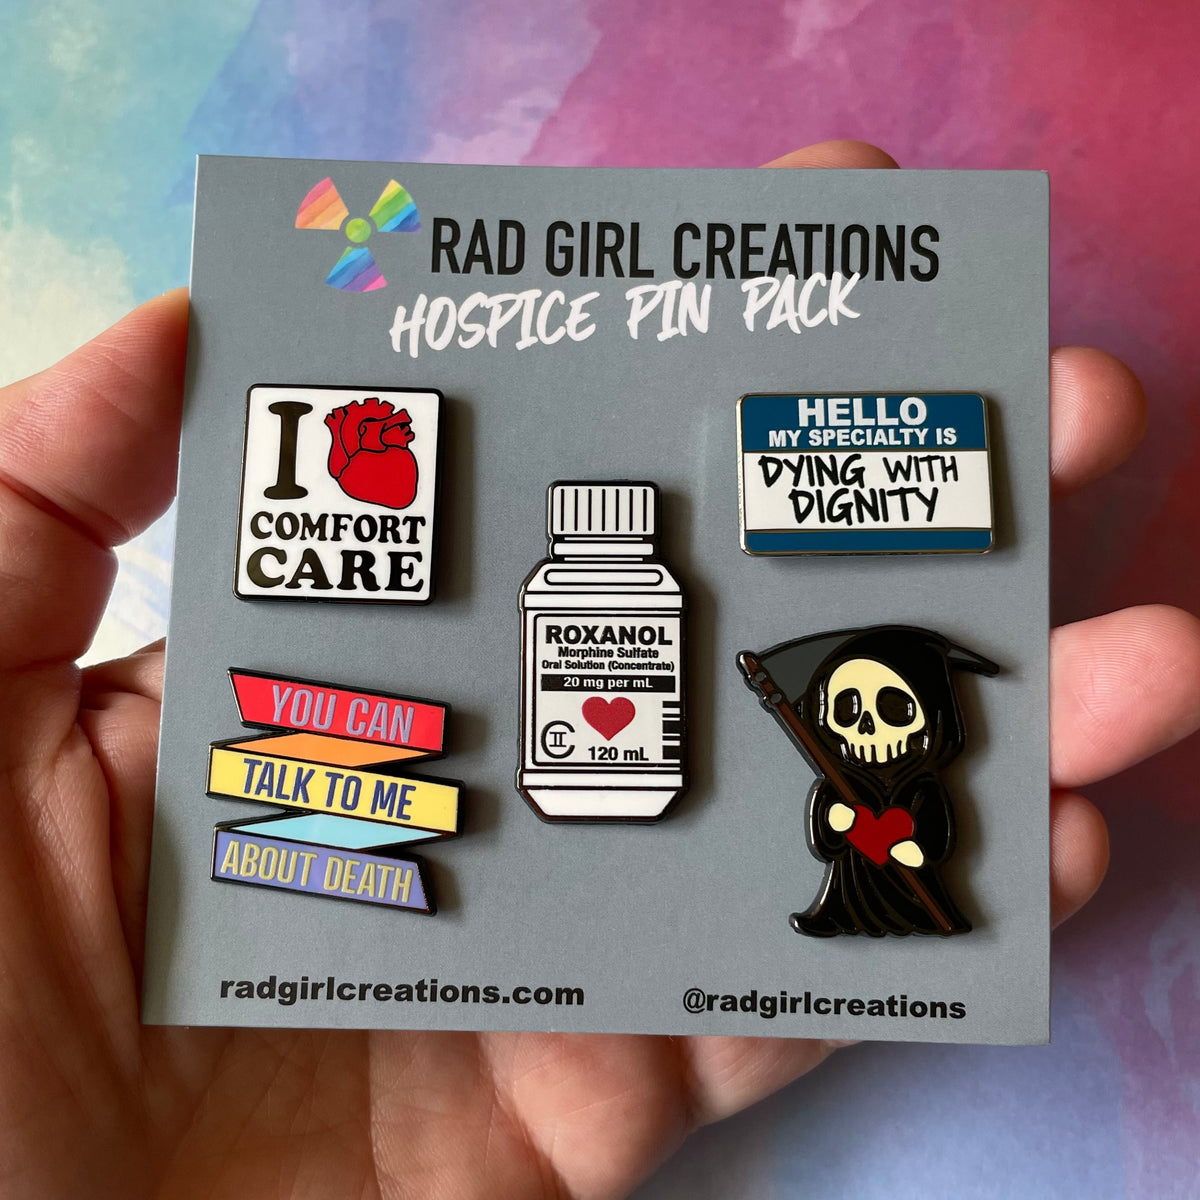 Rad Girl Creations - Medical Enamel Pin